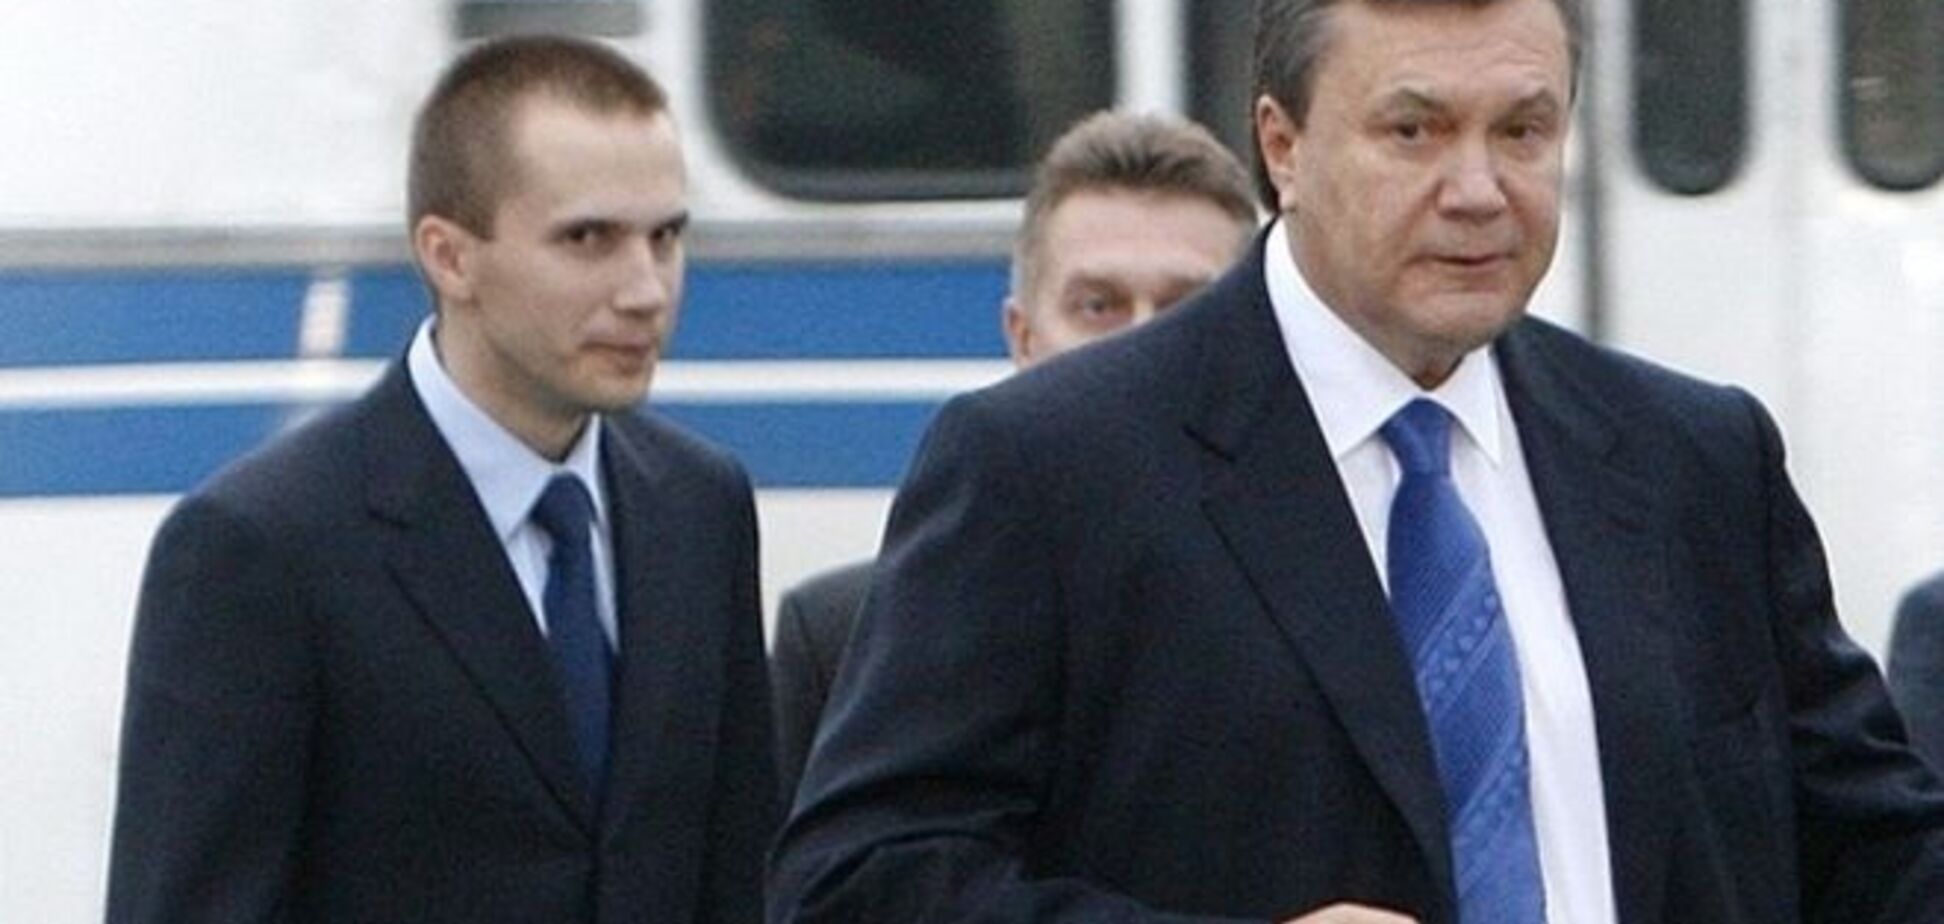 Сім'я Януковича вдруге оскаржила санкції ЄС